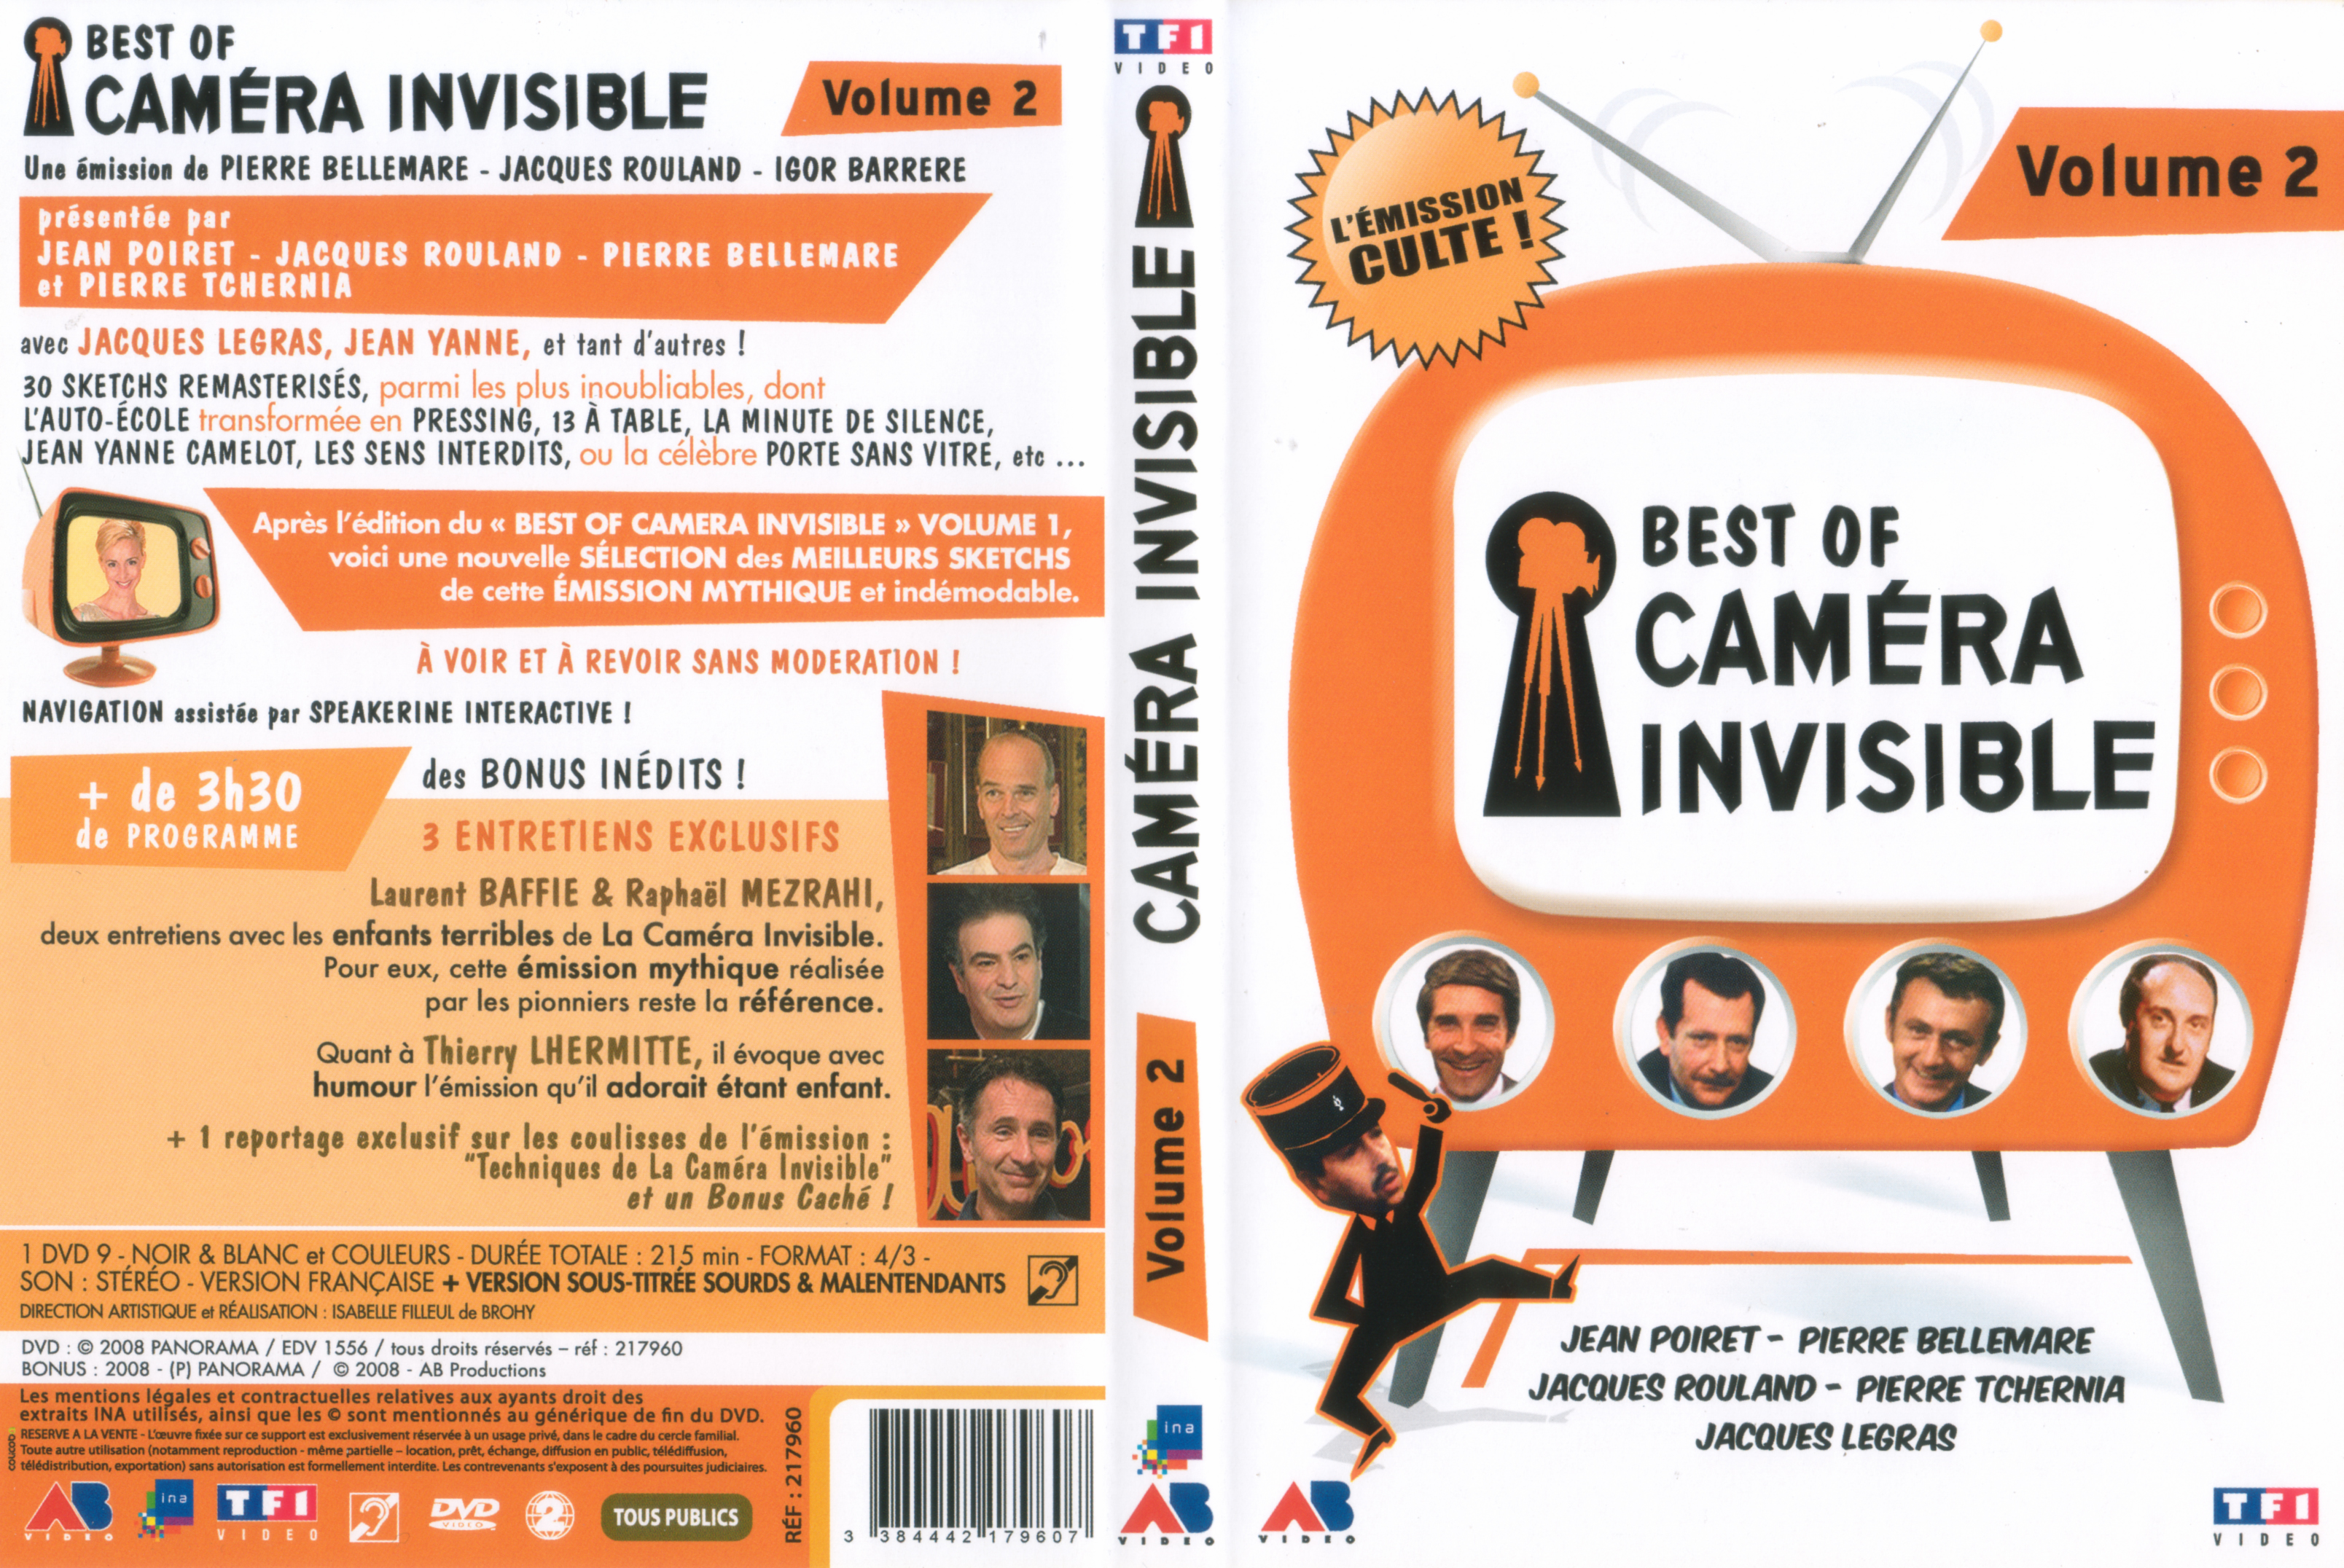 Jaquette DVD La camera invisible Best of vol 2